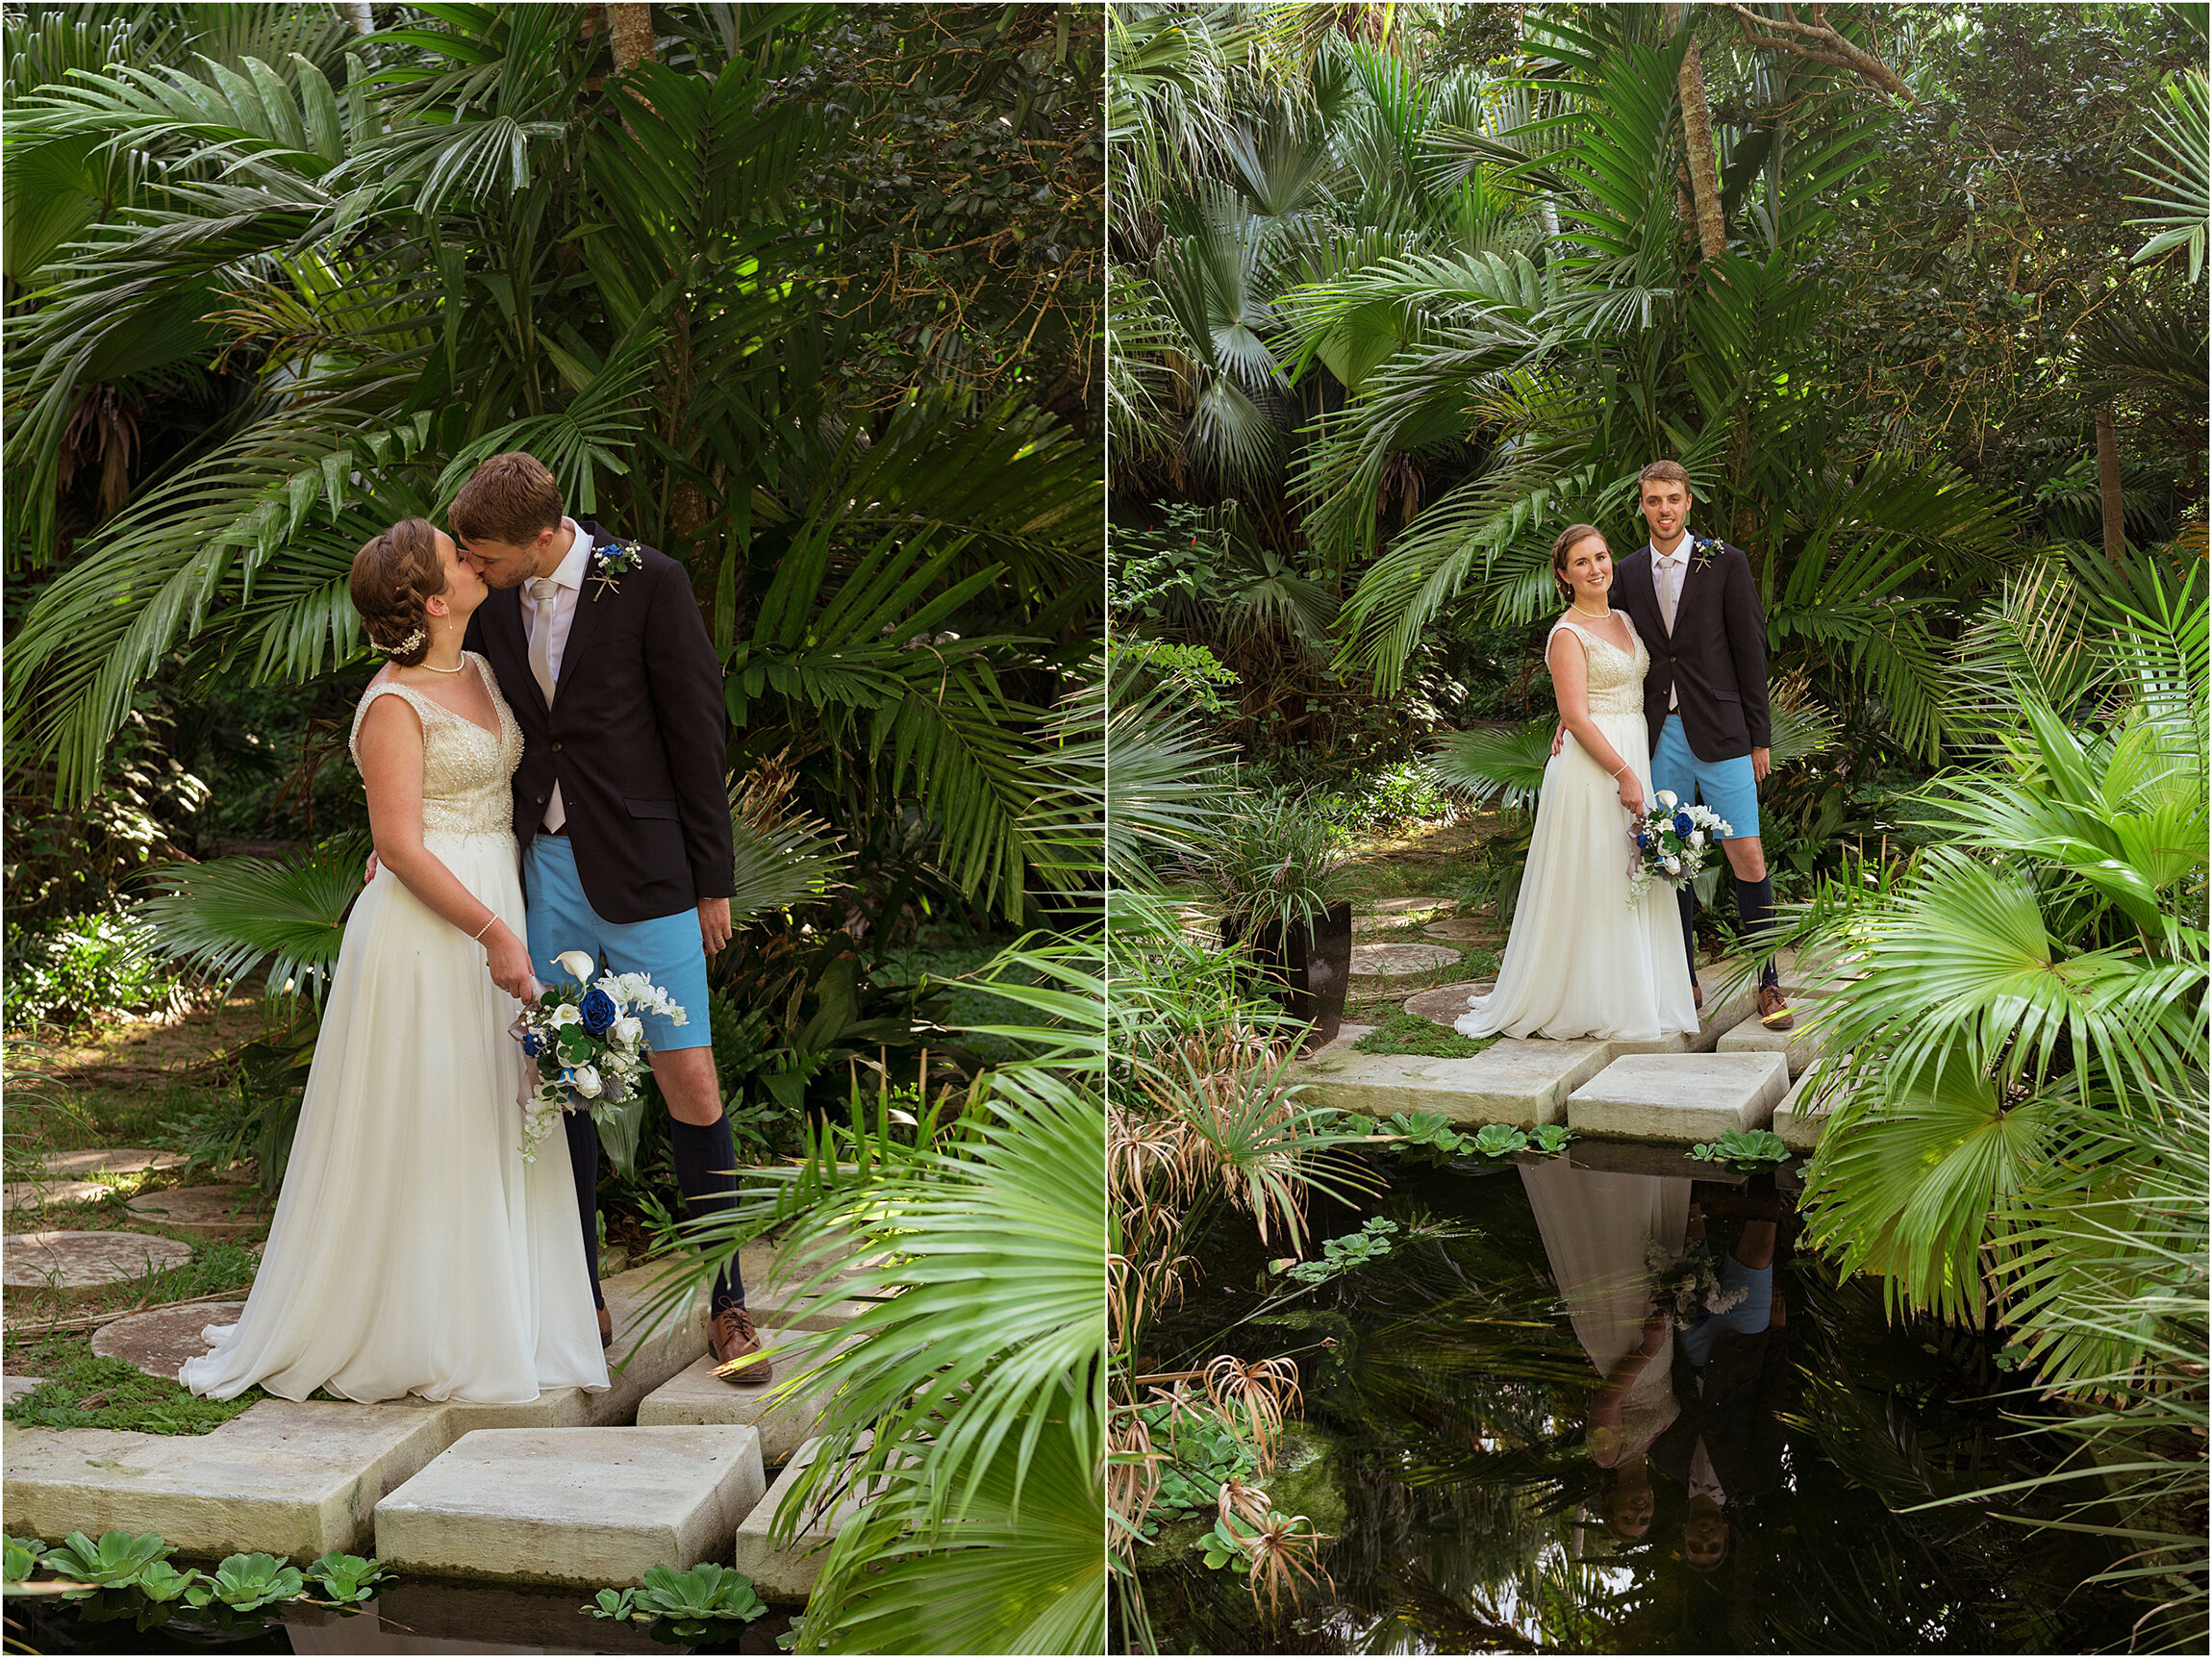 ©FianderFoto_Bermuda Wedding_Cambridge Beaches_064.jpg